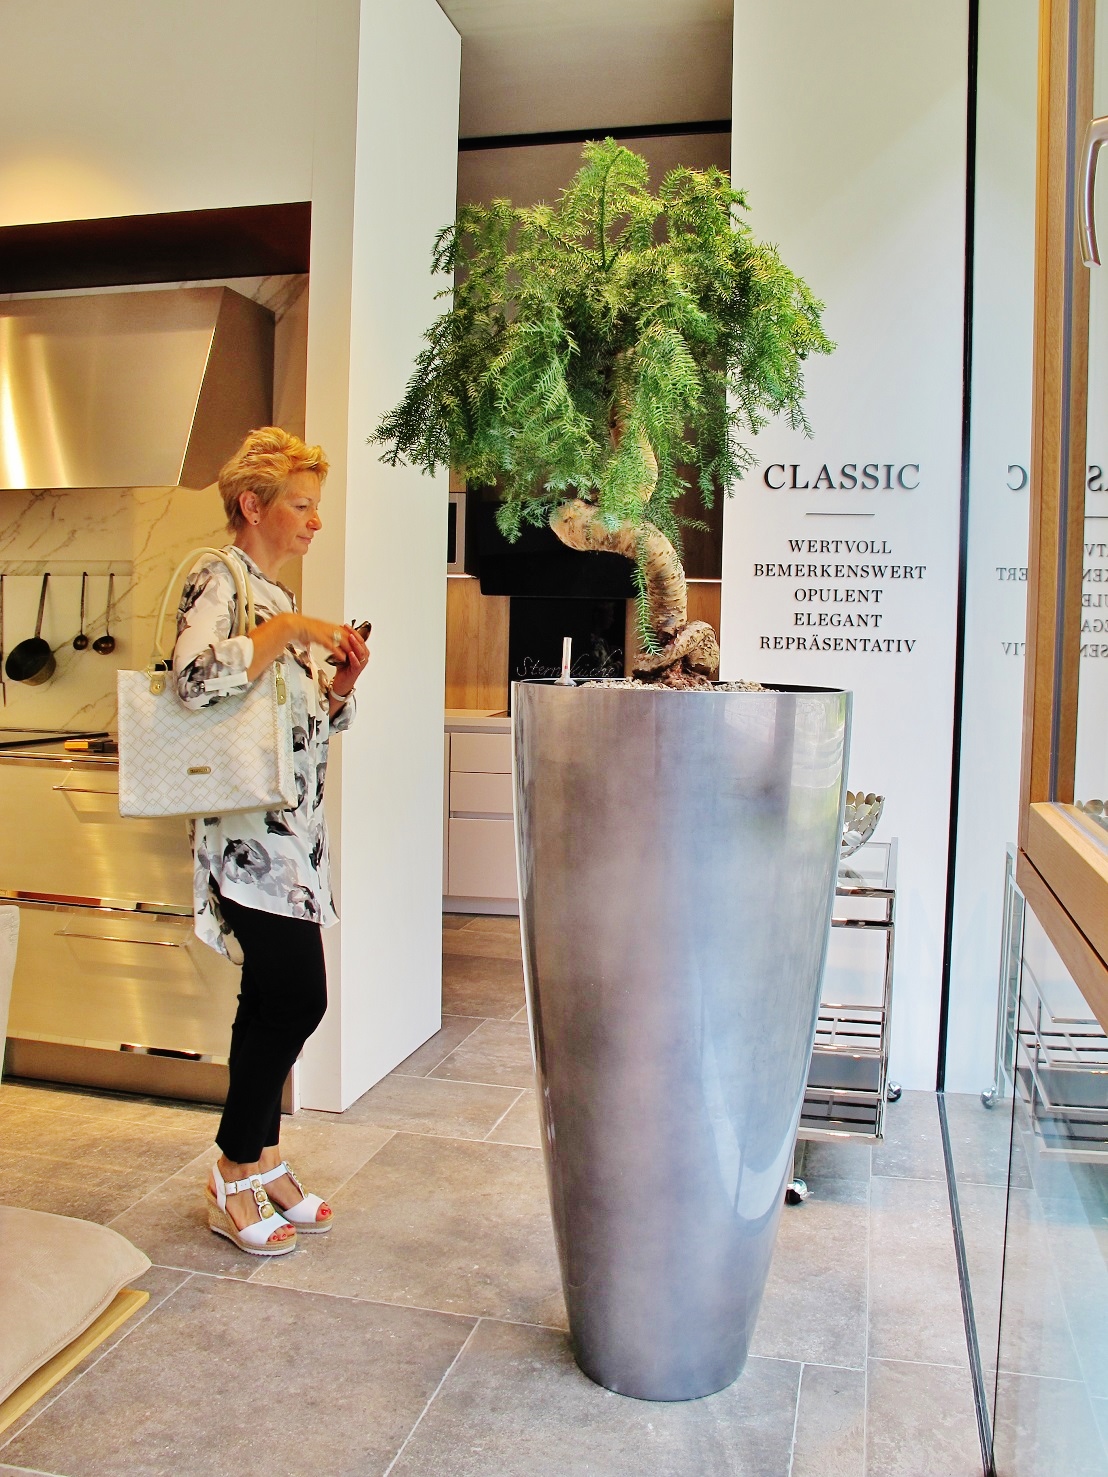 Araucaria cunningham bonsai in Platinum high planter buy online